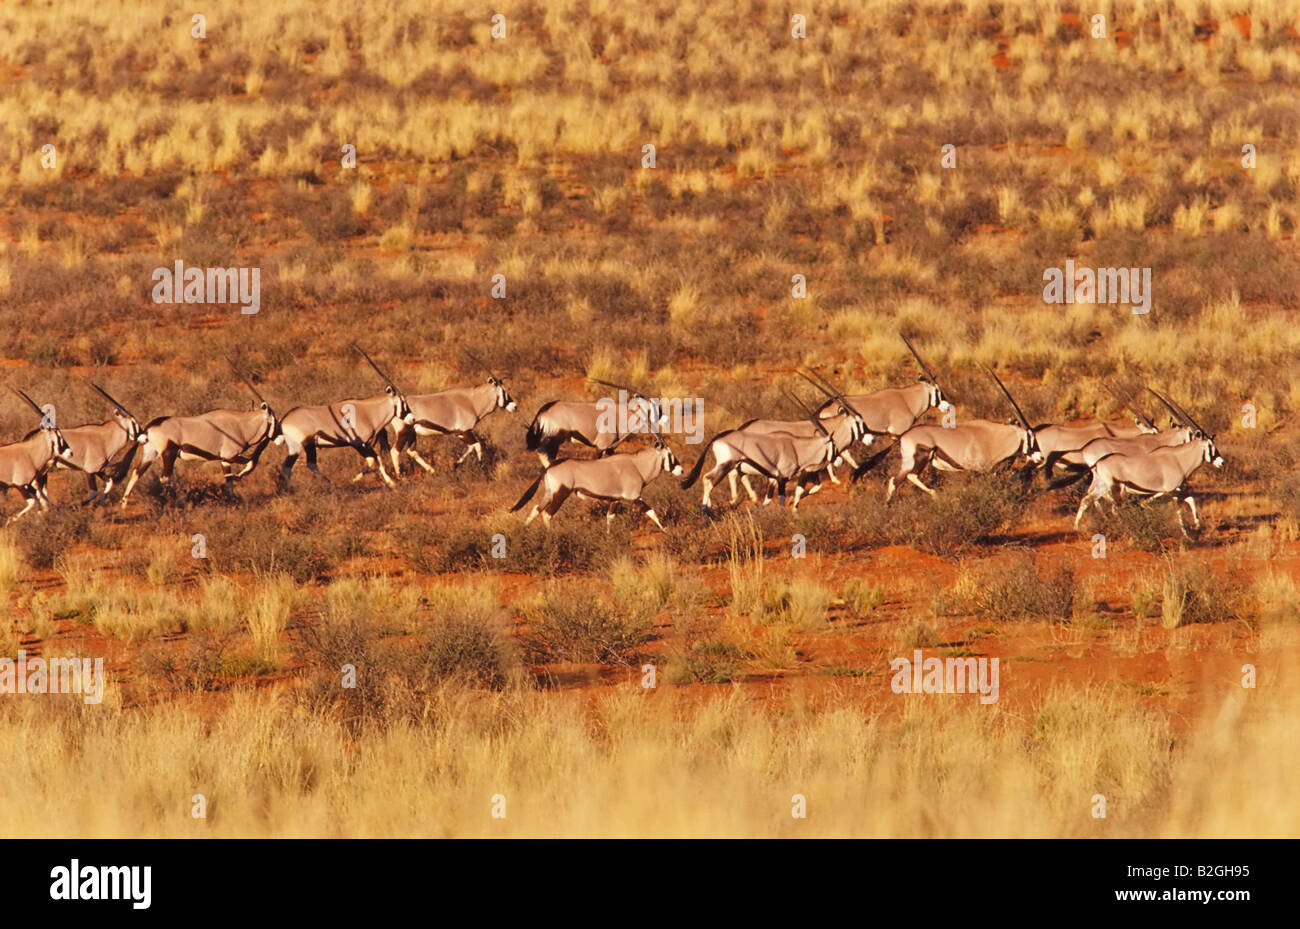 oryx antelope gazelle namibia veld savannah africa group Stock Photo